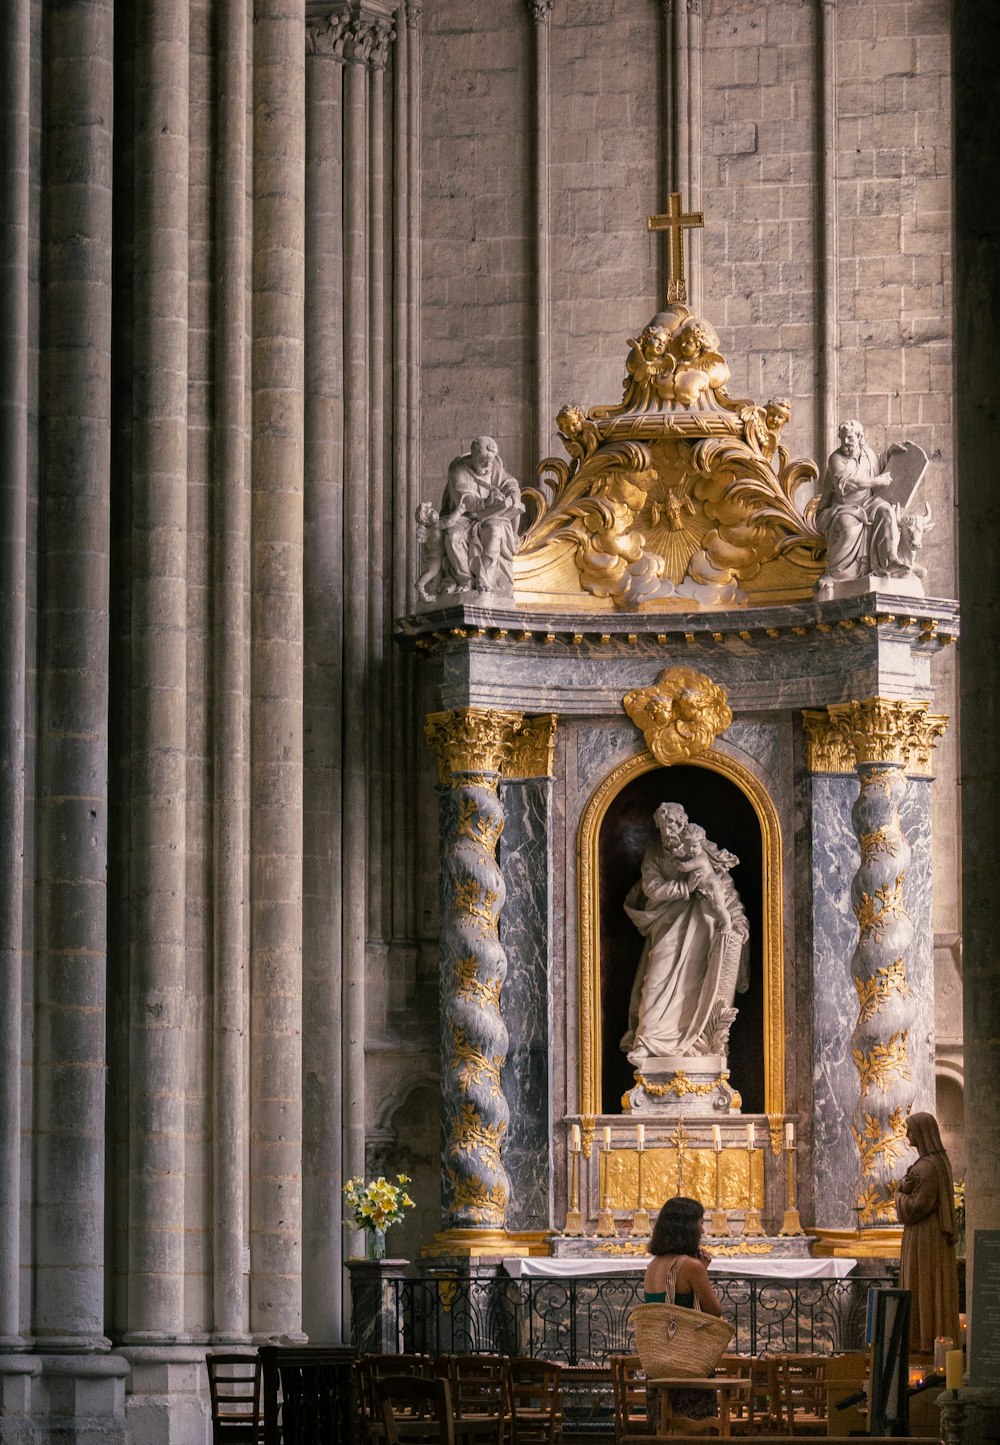 a statue of a woman in a church